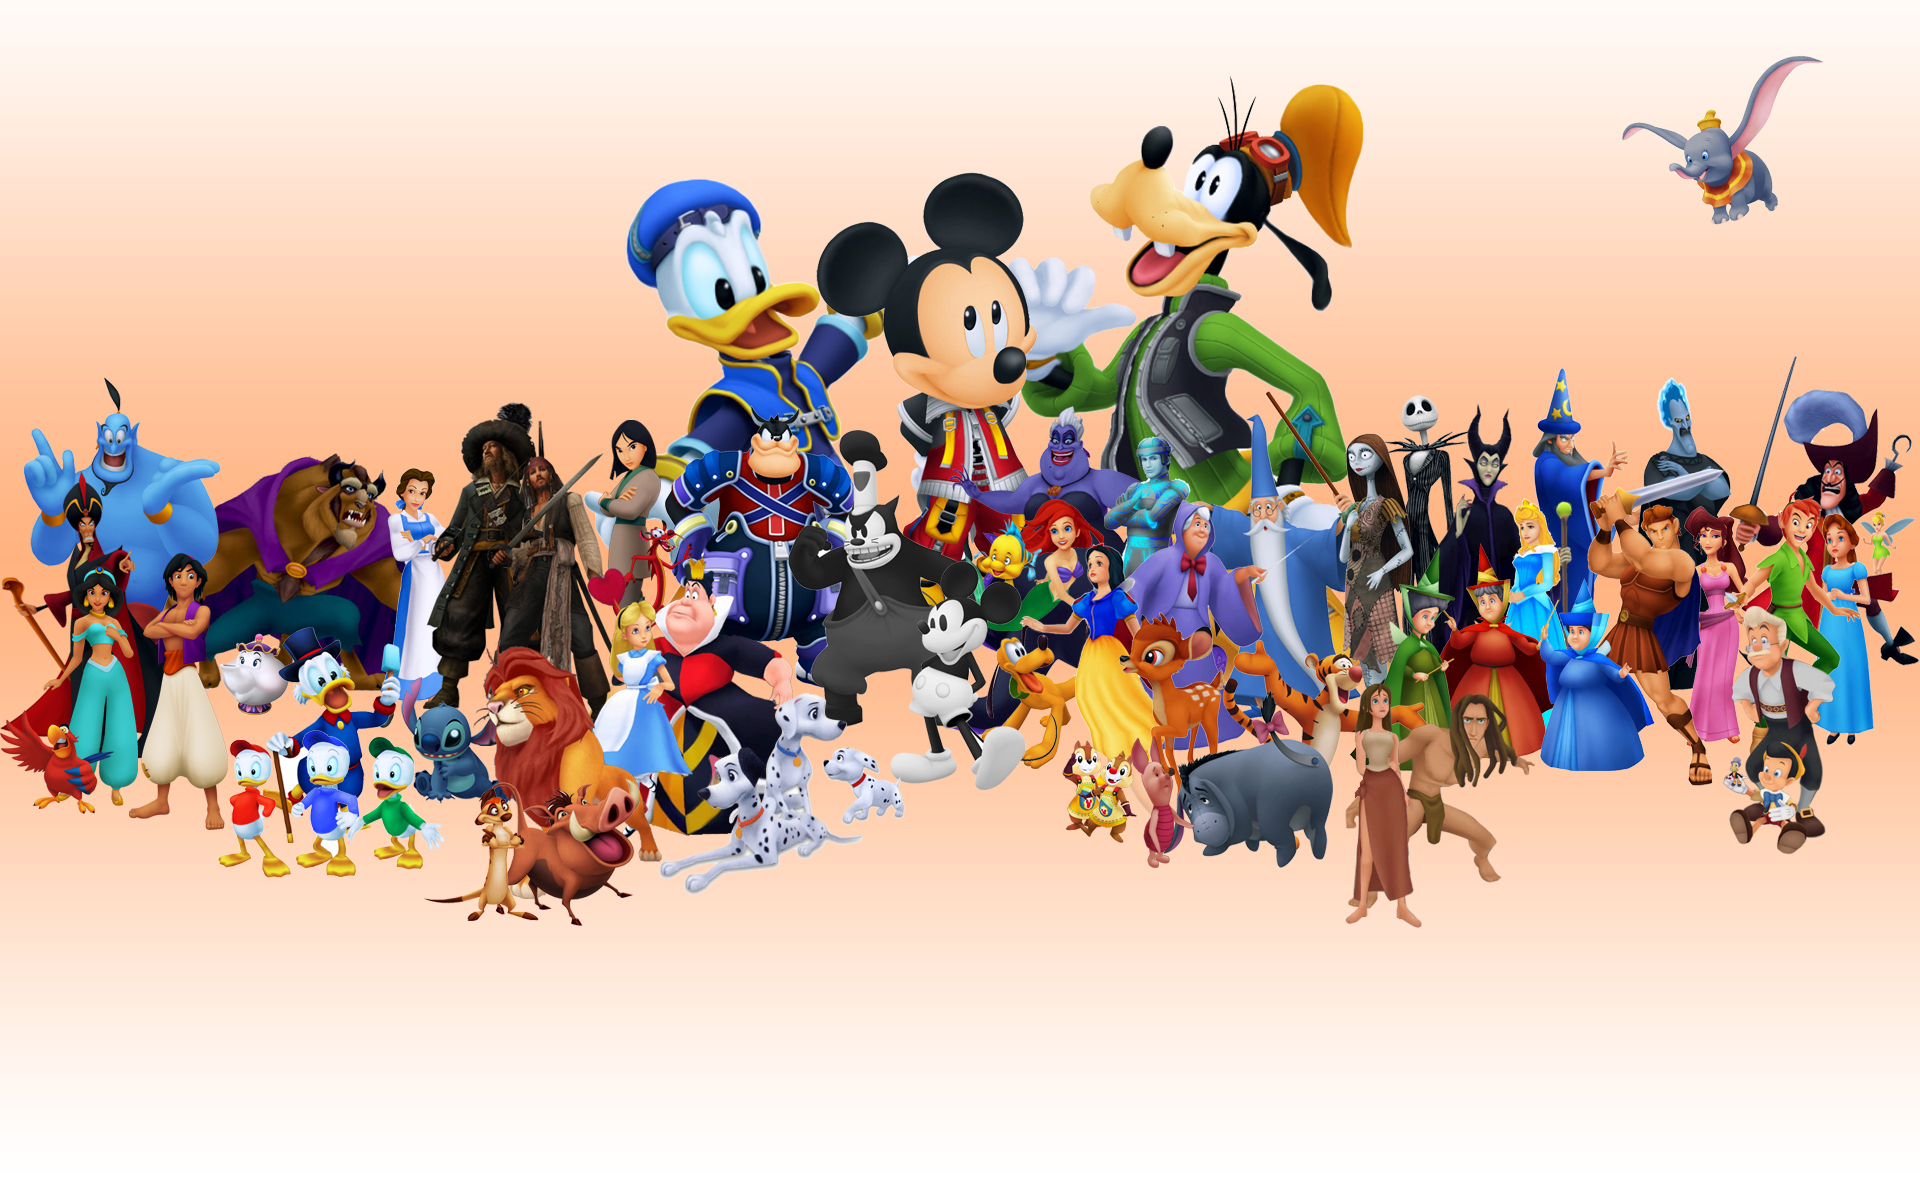 Disney's Characters